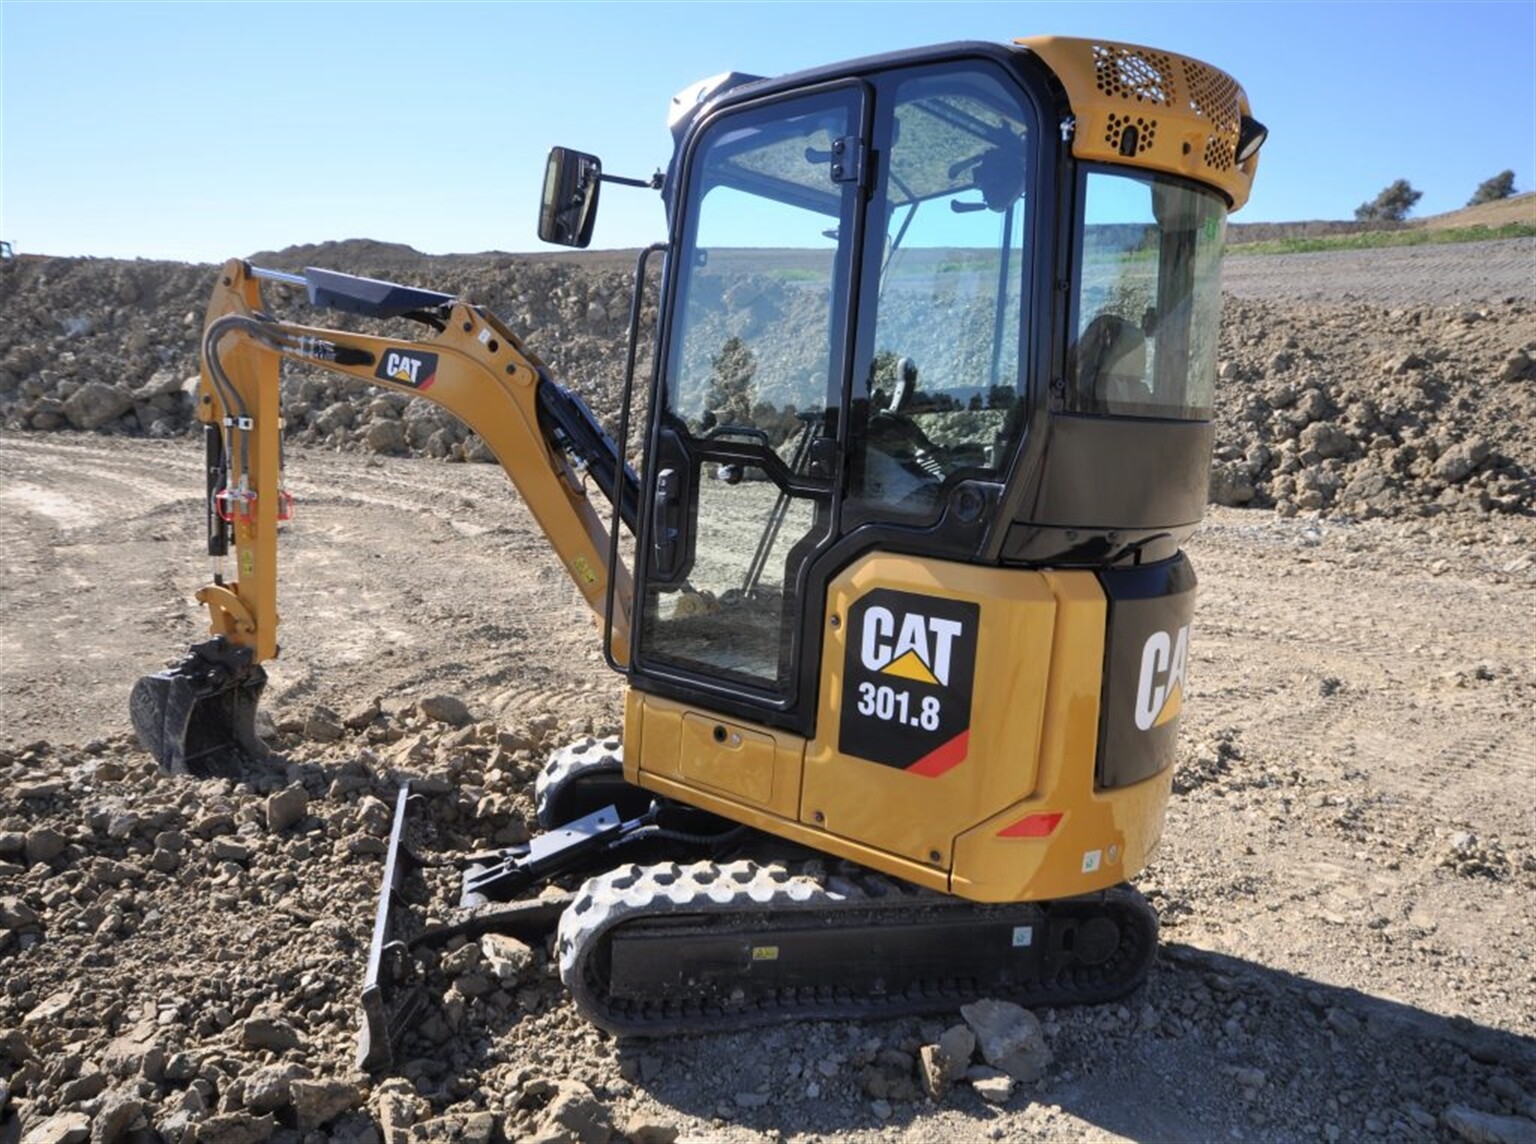 Industry leading features for Next Gen Cat mini excavators